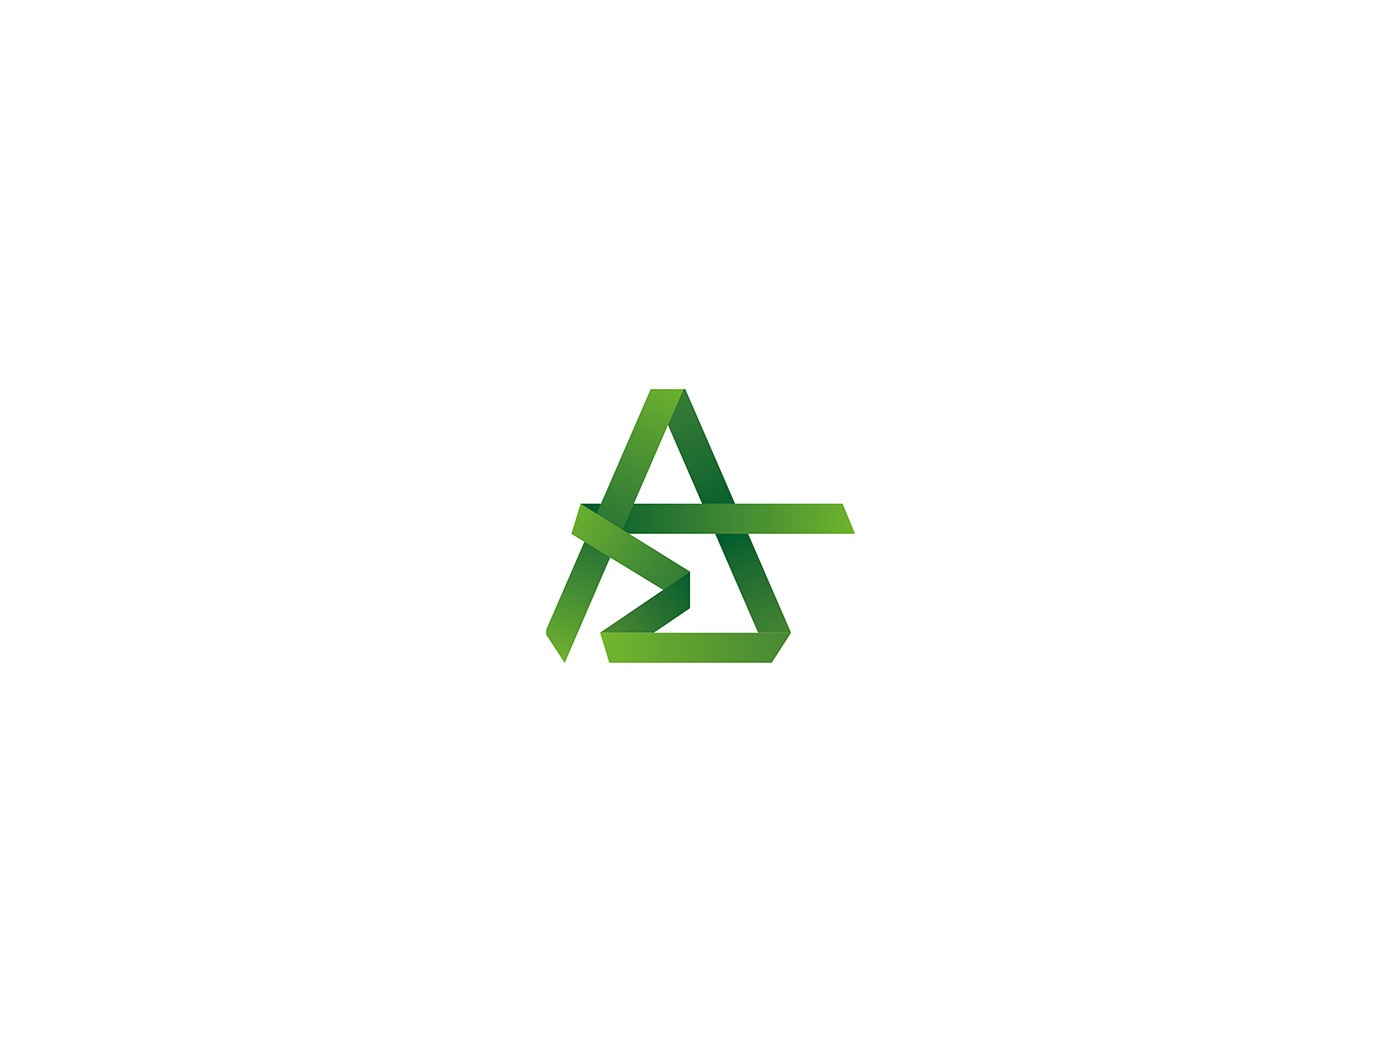 architect brand corporate image coordinate image business card Logo Design logo letterhead bioarchitecture green Ecology cool studio